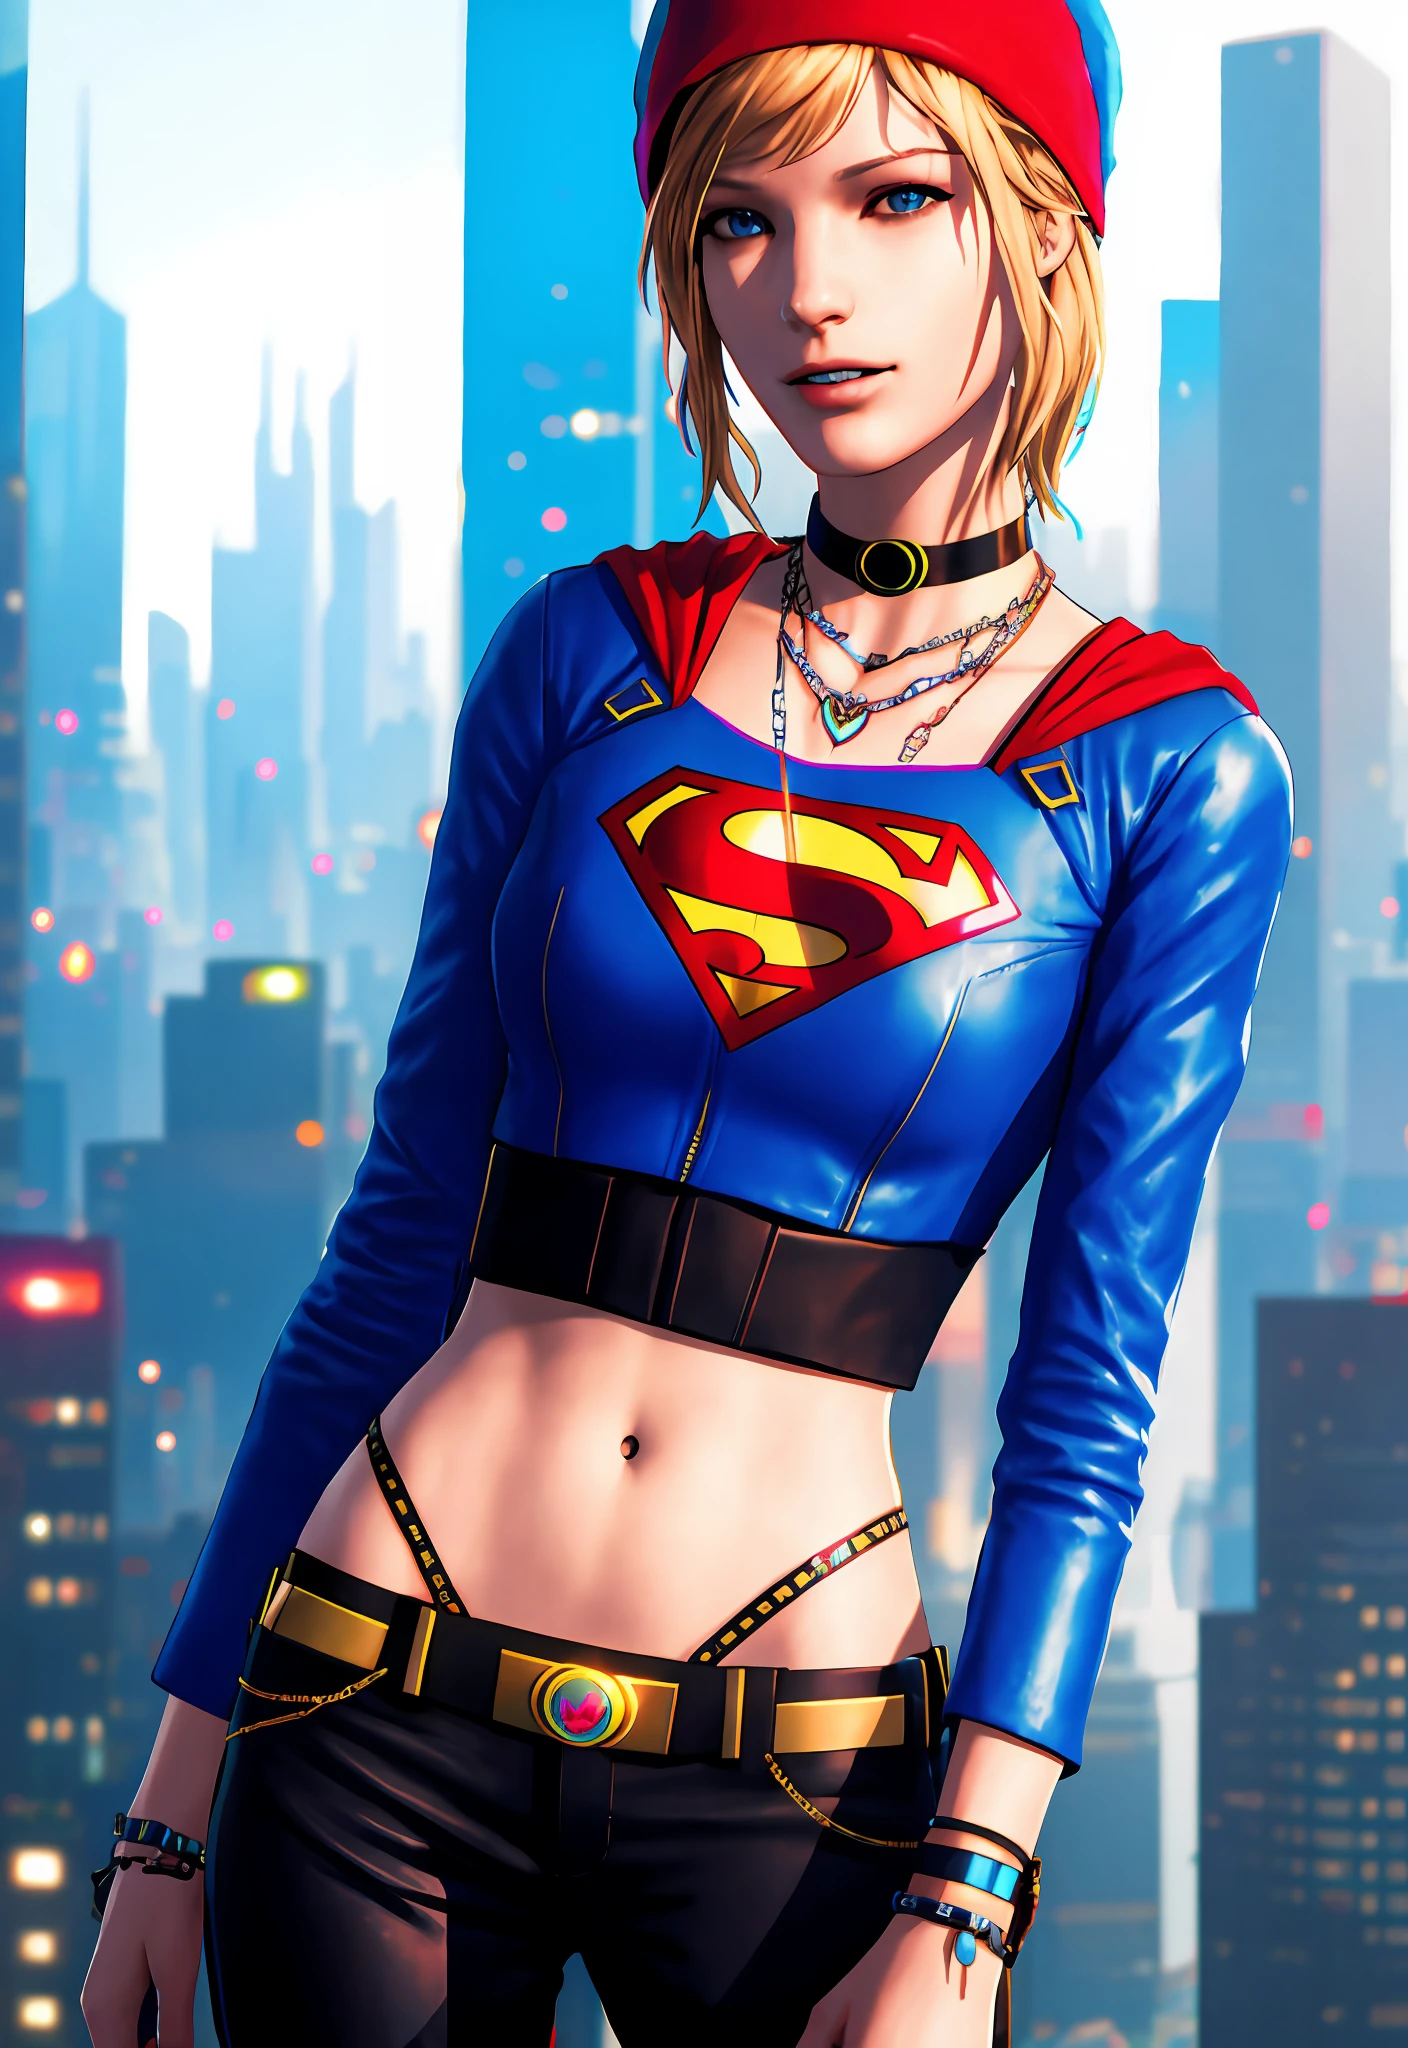 Cyberpunk supergirl, slim waist, ultra-detailed, masterpiece, high quality, cyberpunk city background, chloeprice, blonde hair, blue eyes, beanie, choker, tattos, superman s on chest, beautiful girl